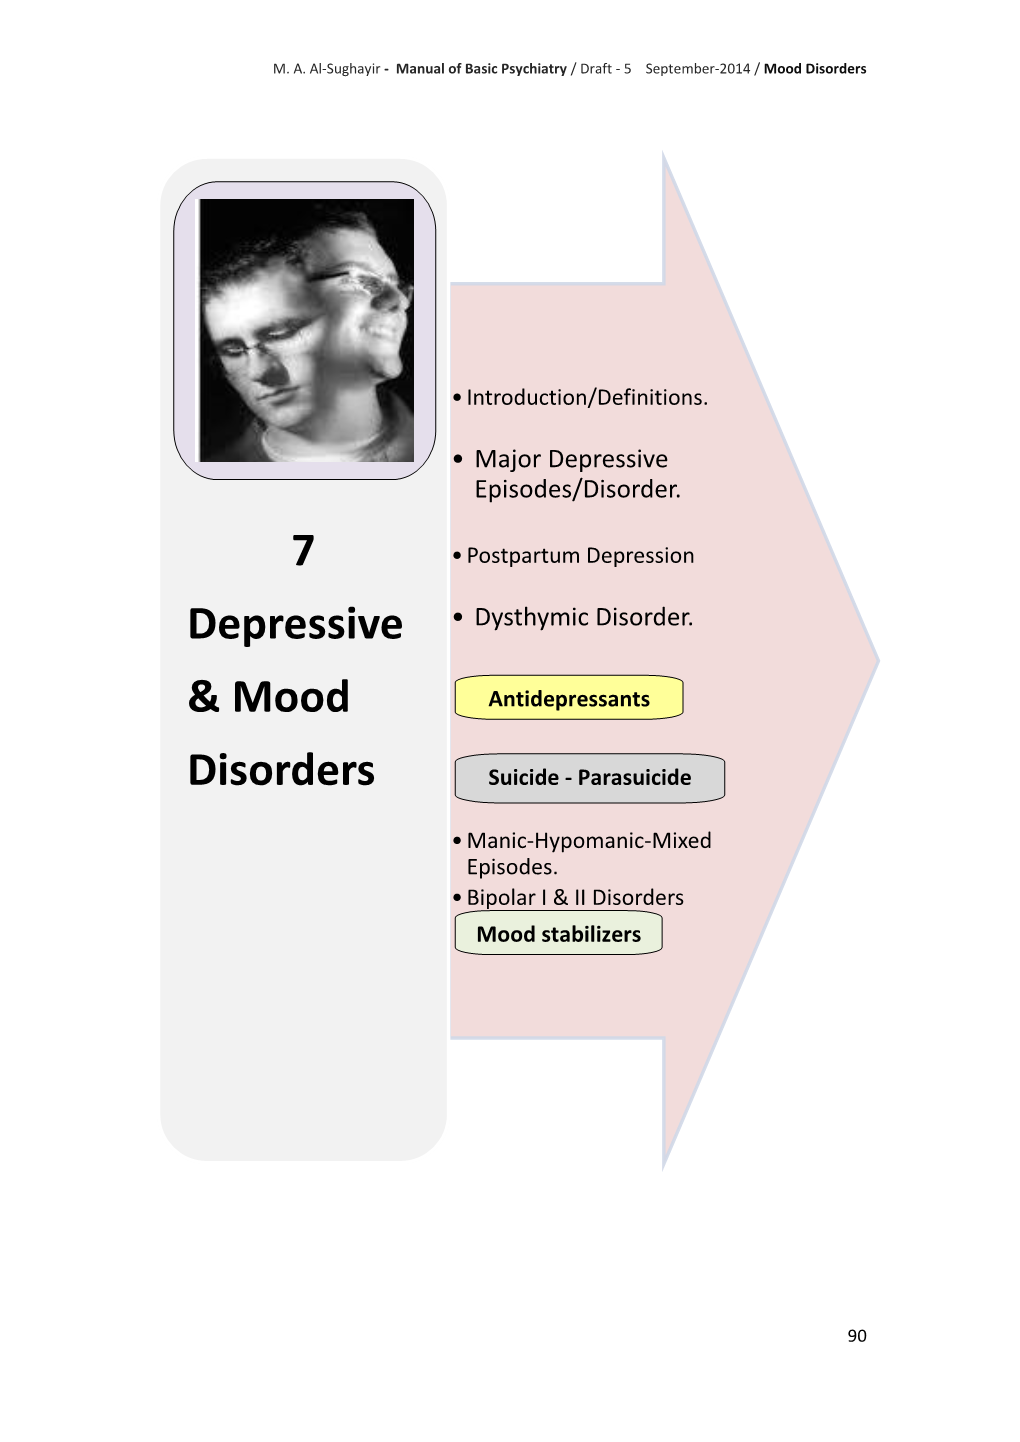 7 Depressive & Mood Disorders